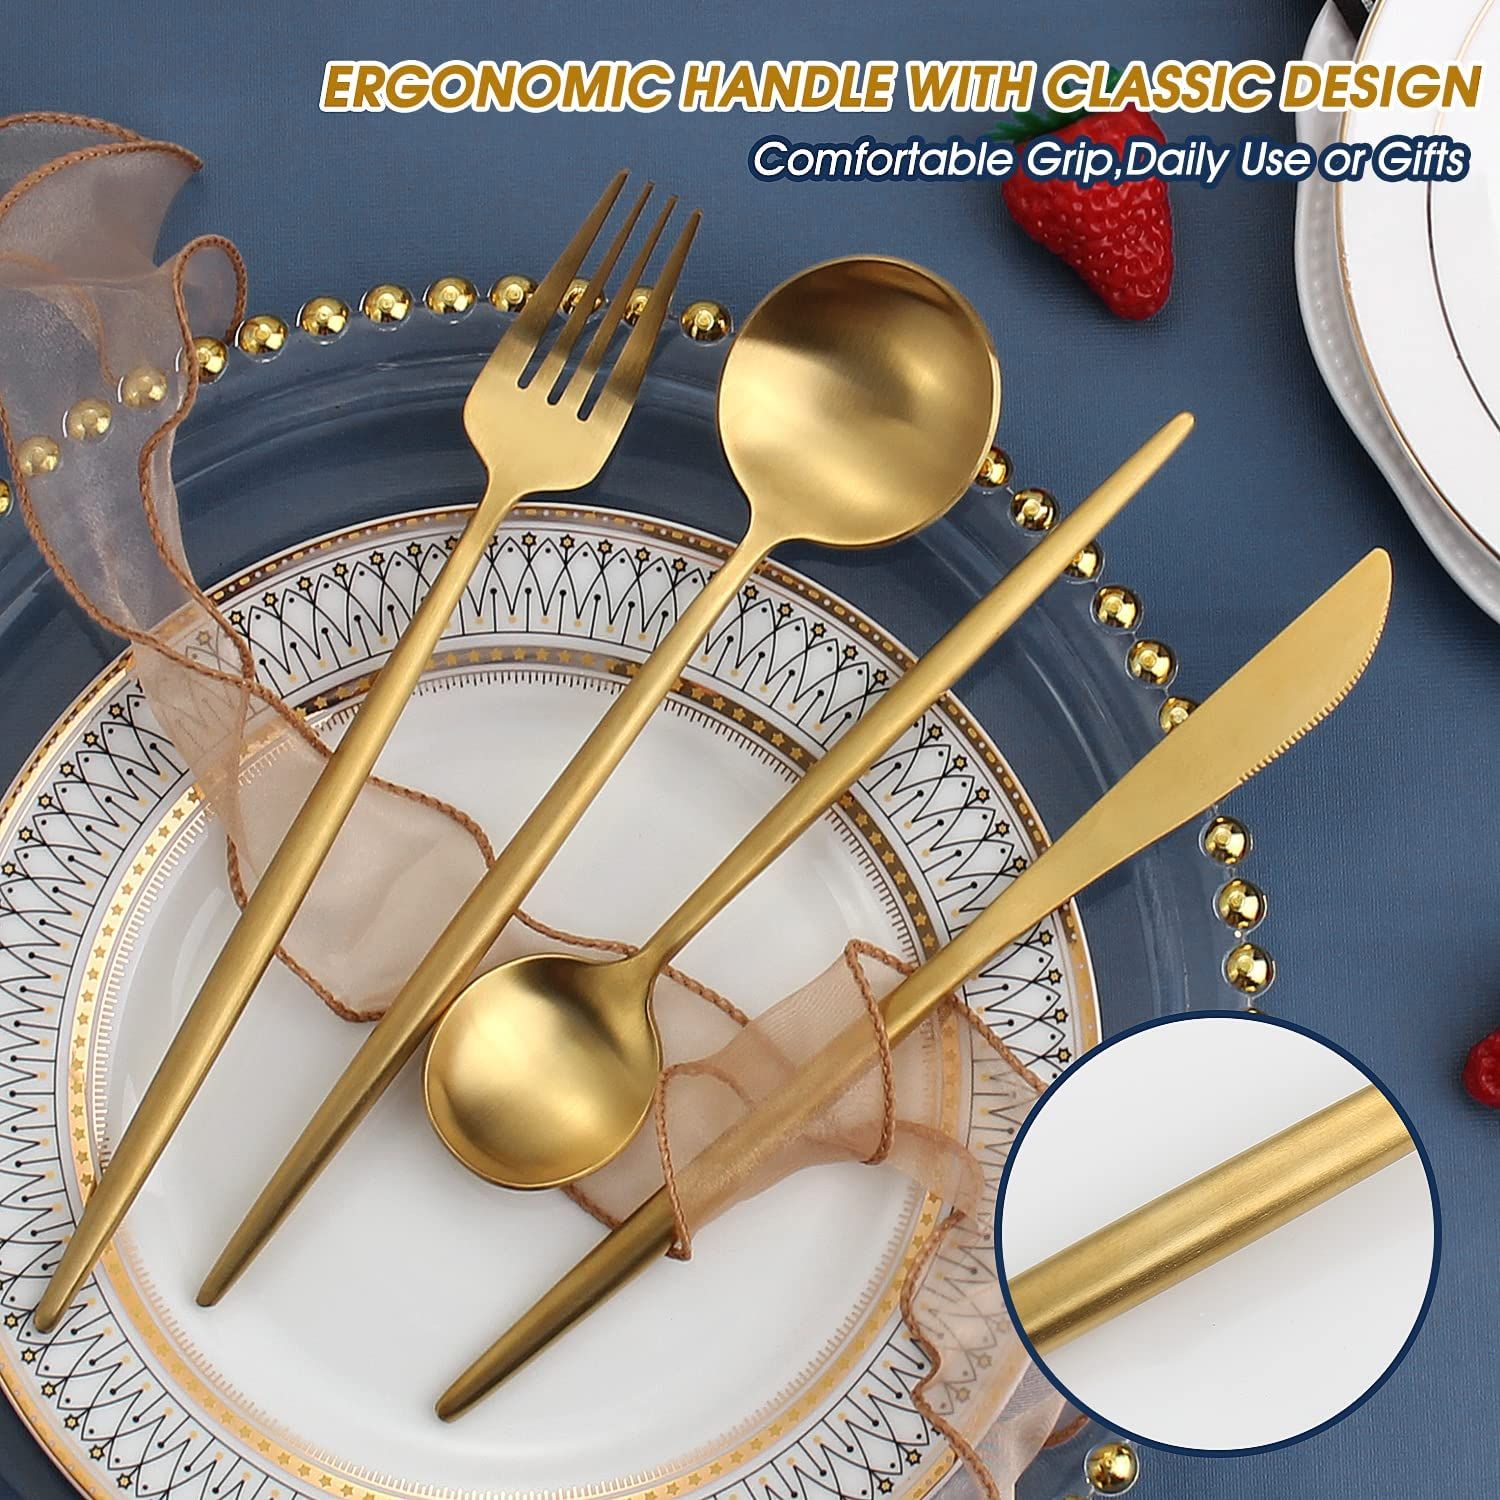 Bulk Silverware Flatware China Gold Stainless Cutlery Wholesale